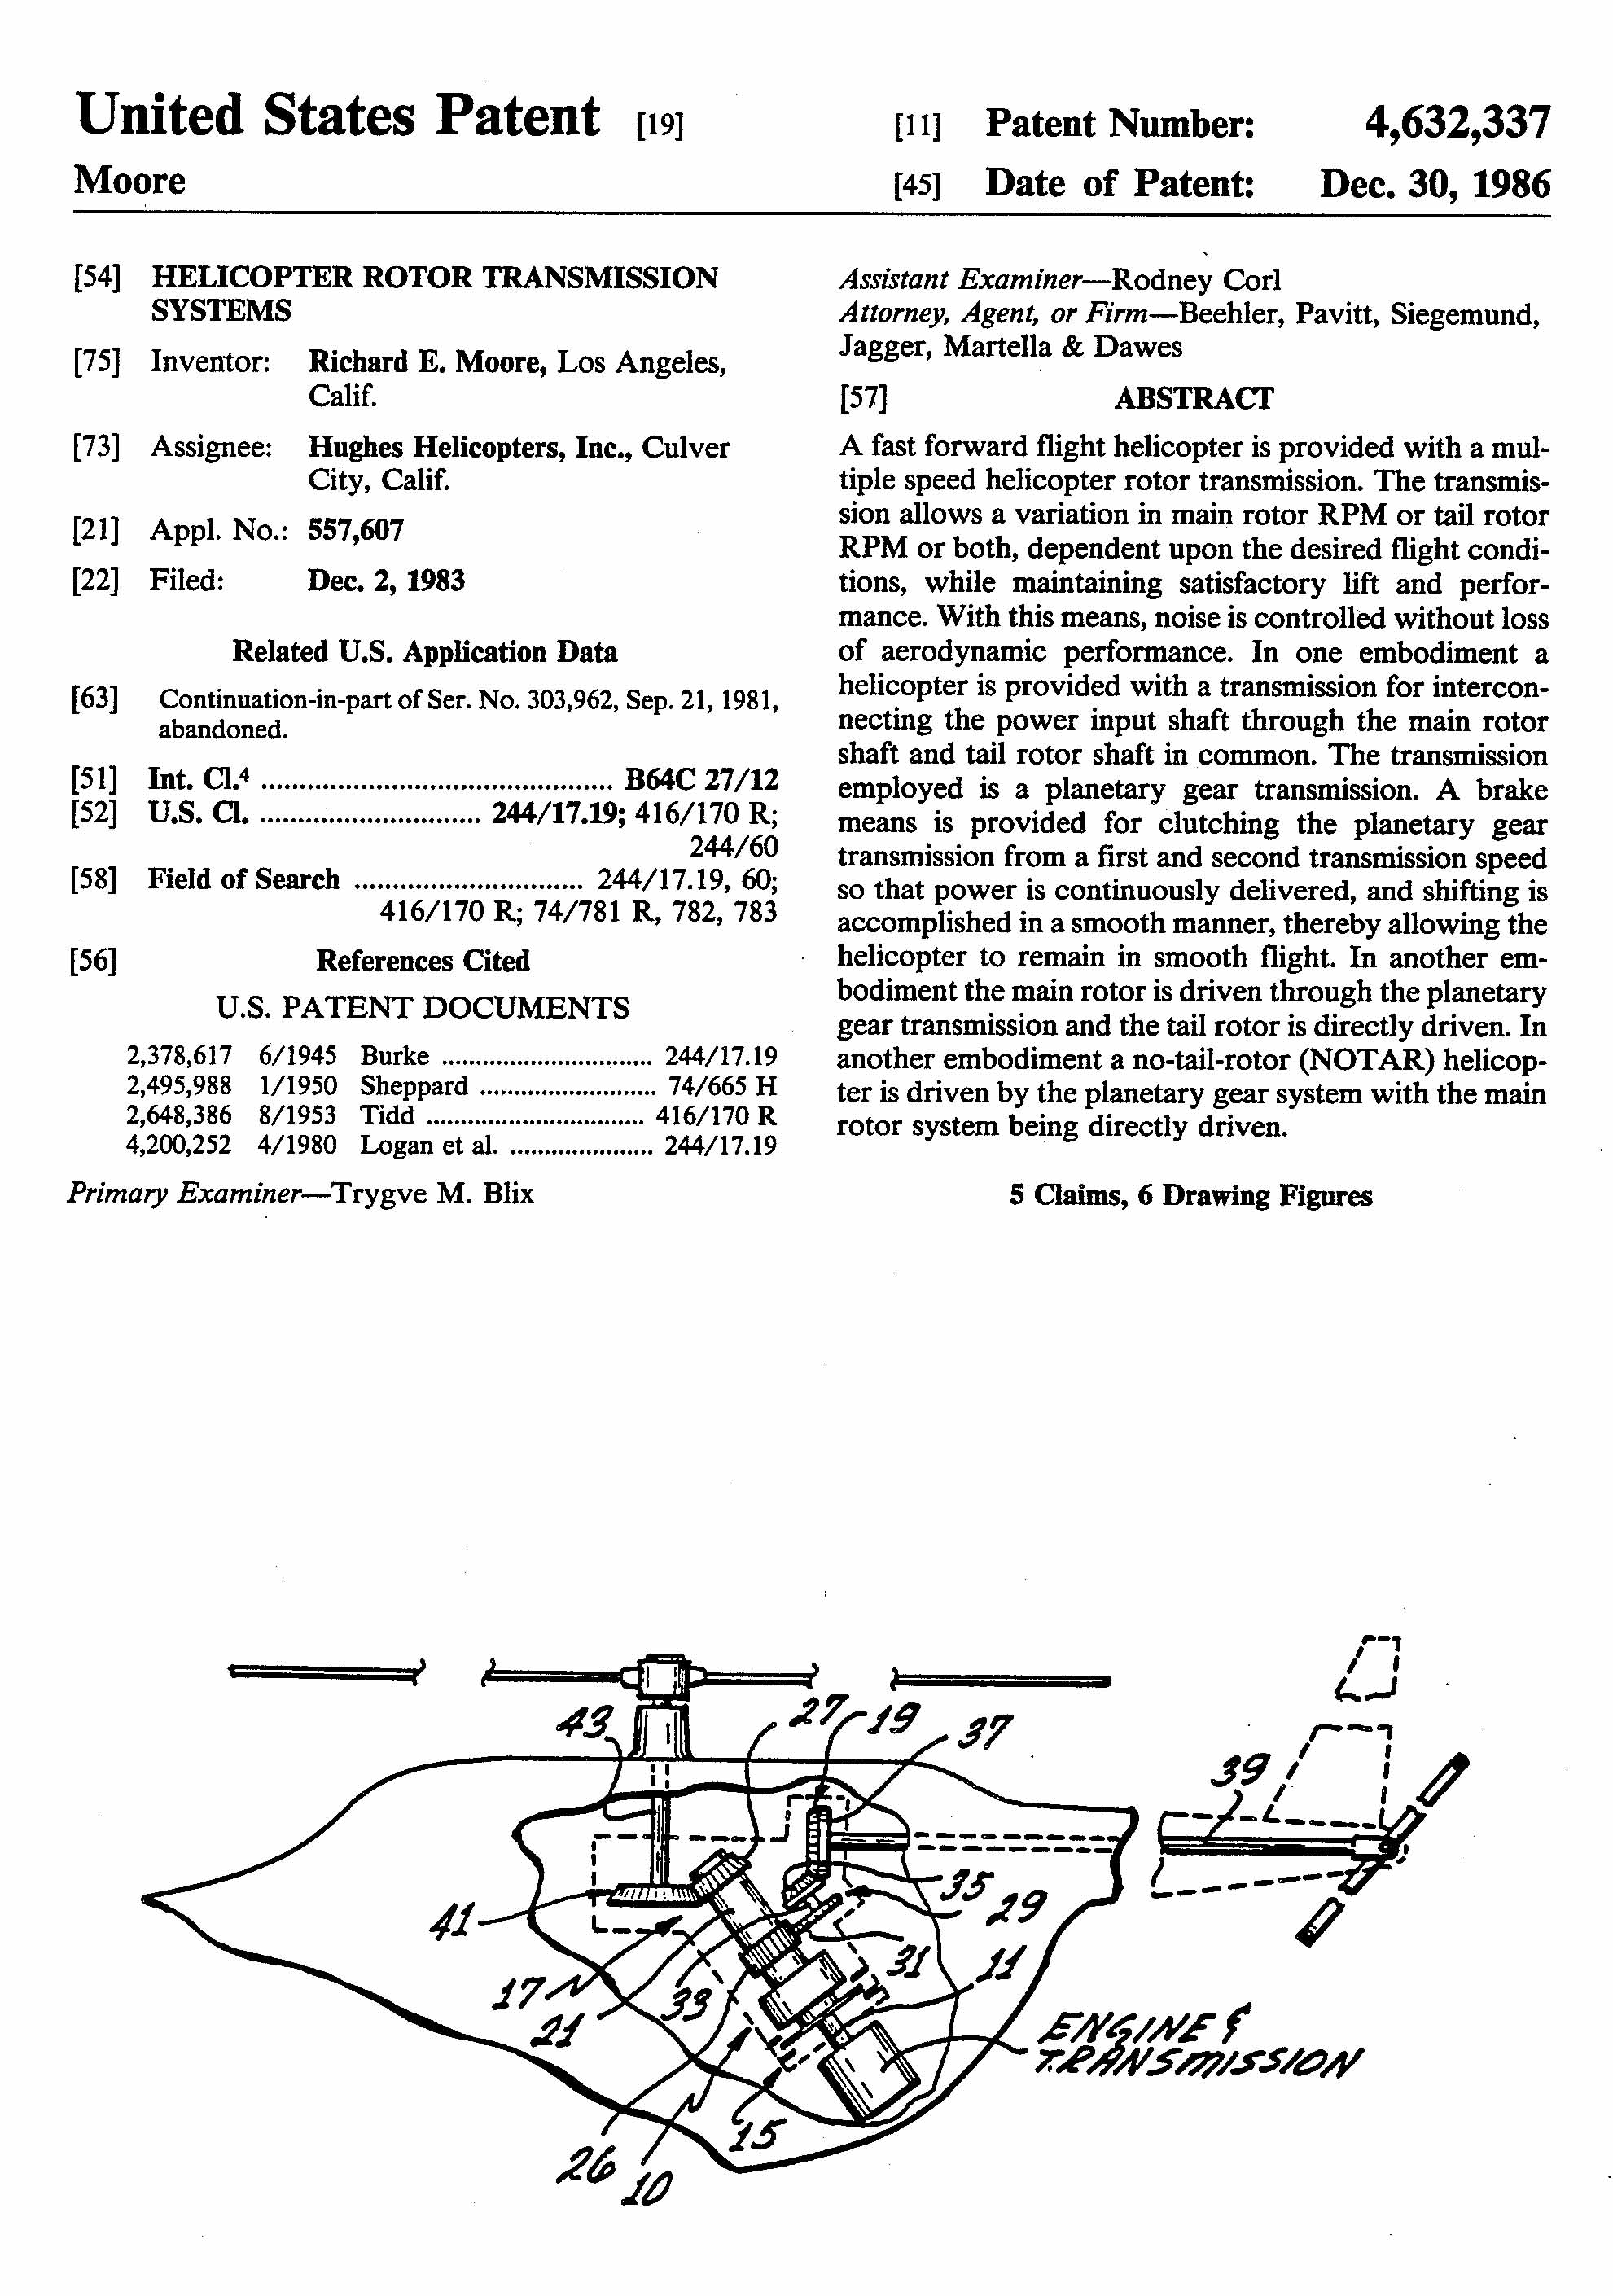 Richard Moore - US Patent 4632337 Dec 30, 1986